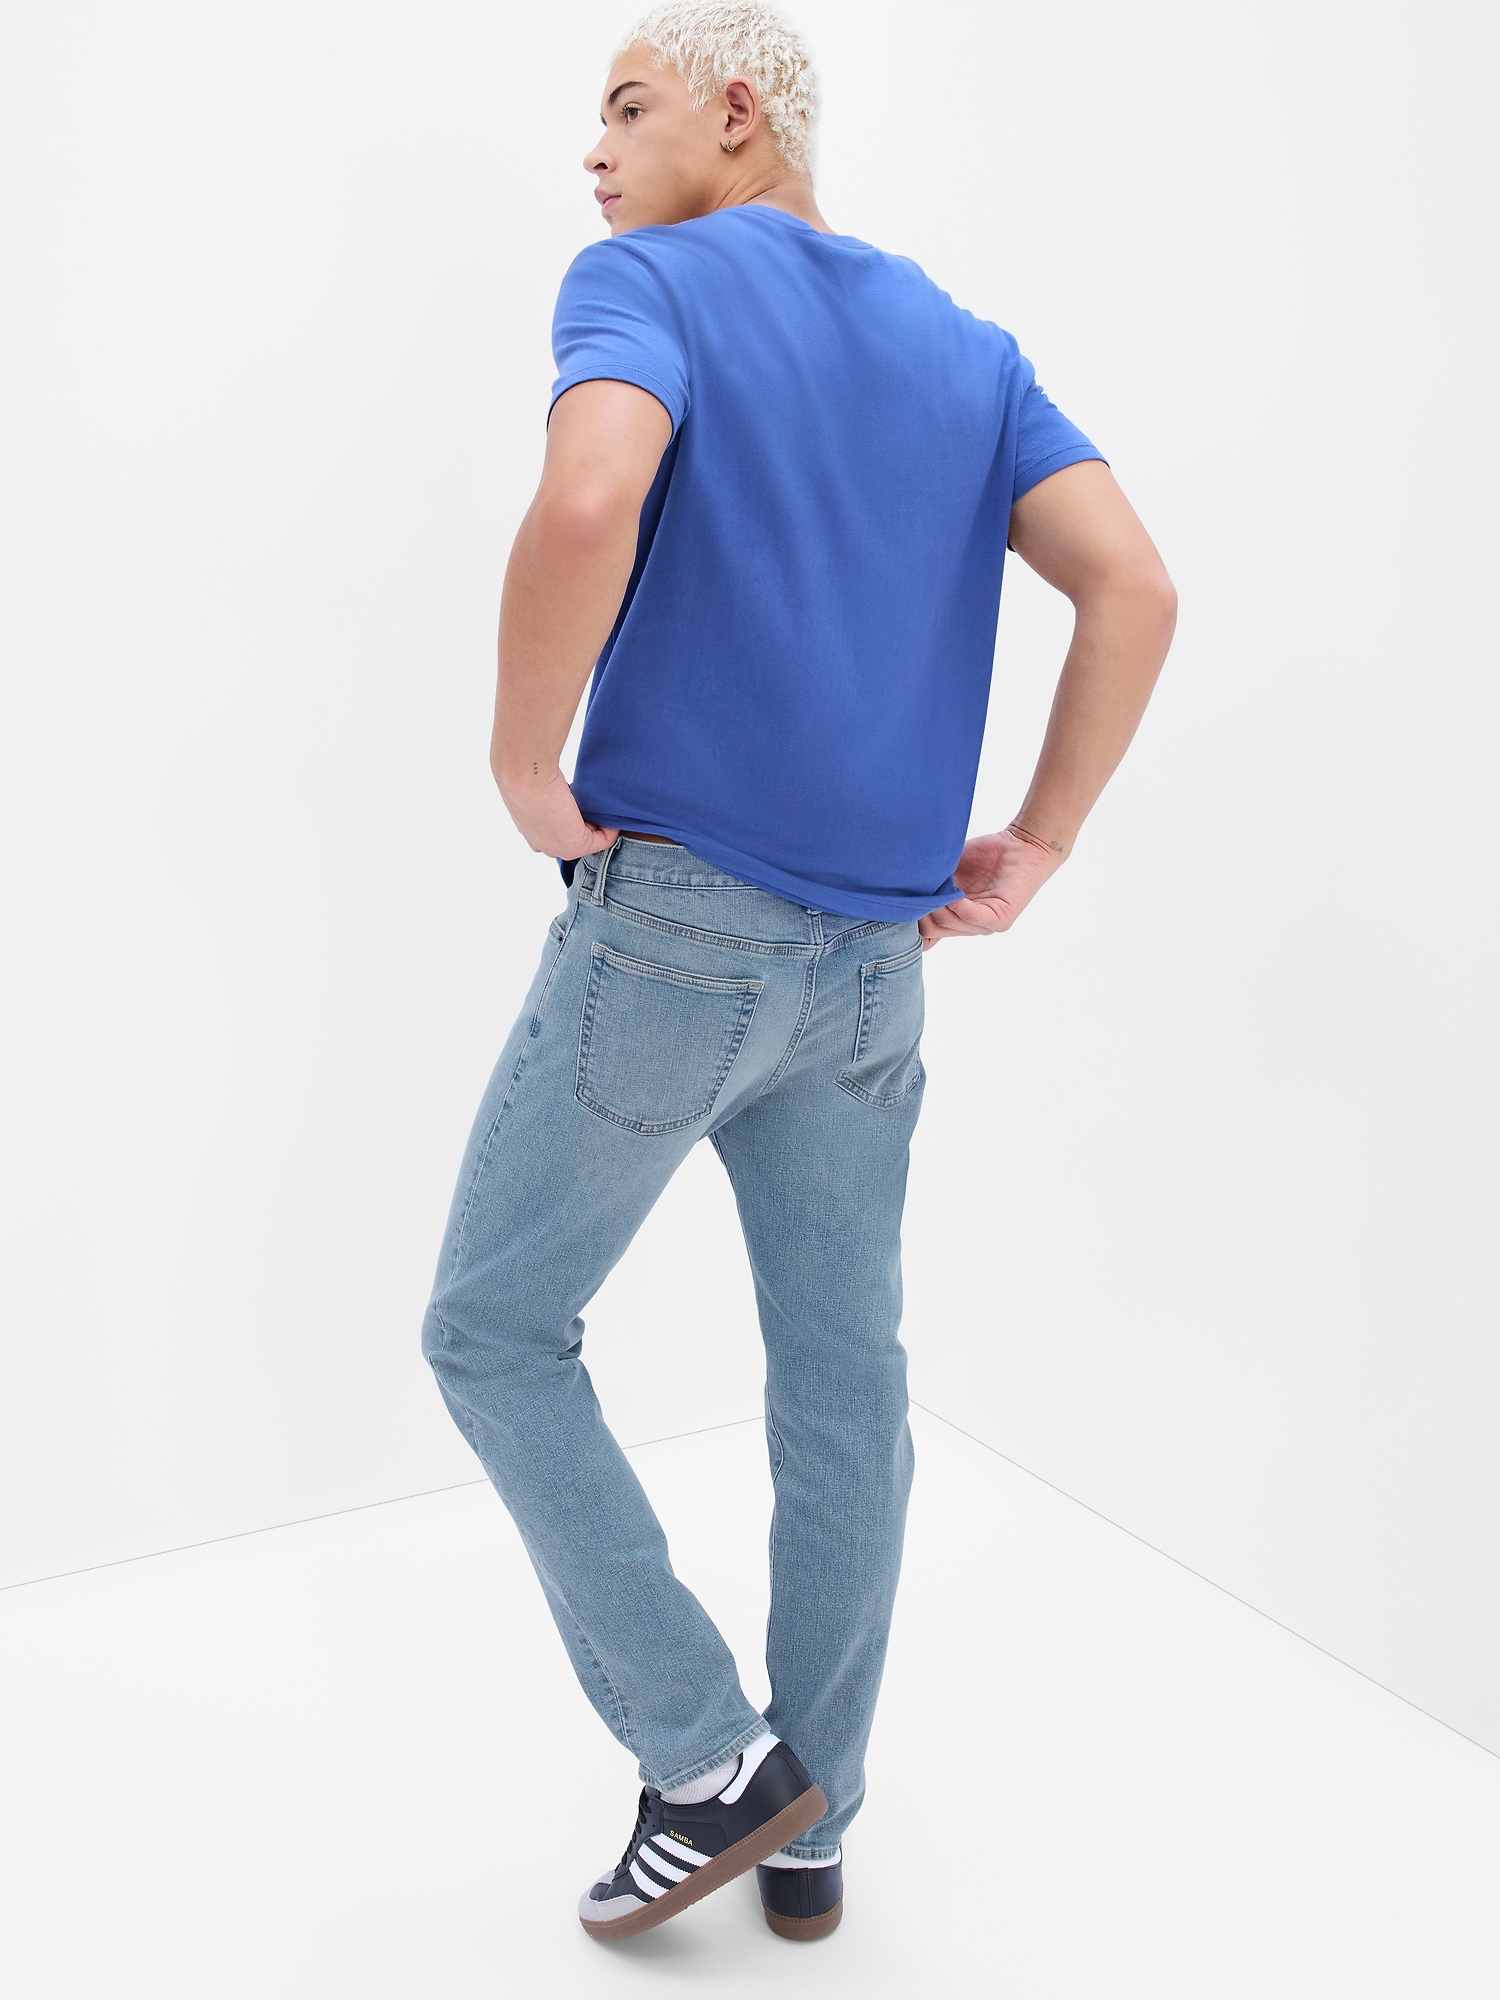 GapFlex Skinny Jeans with Washwell